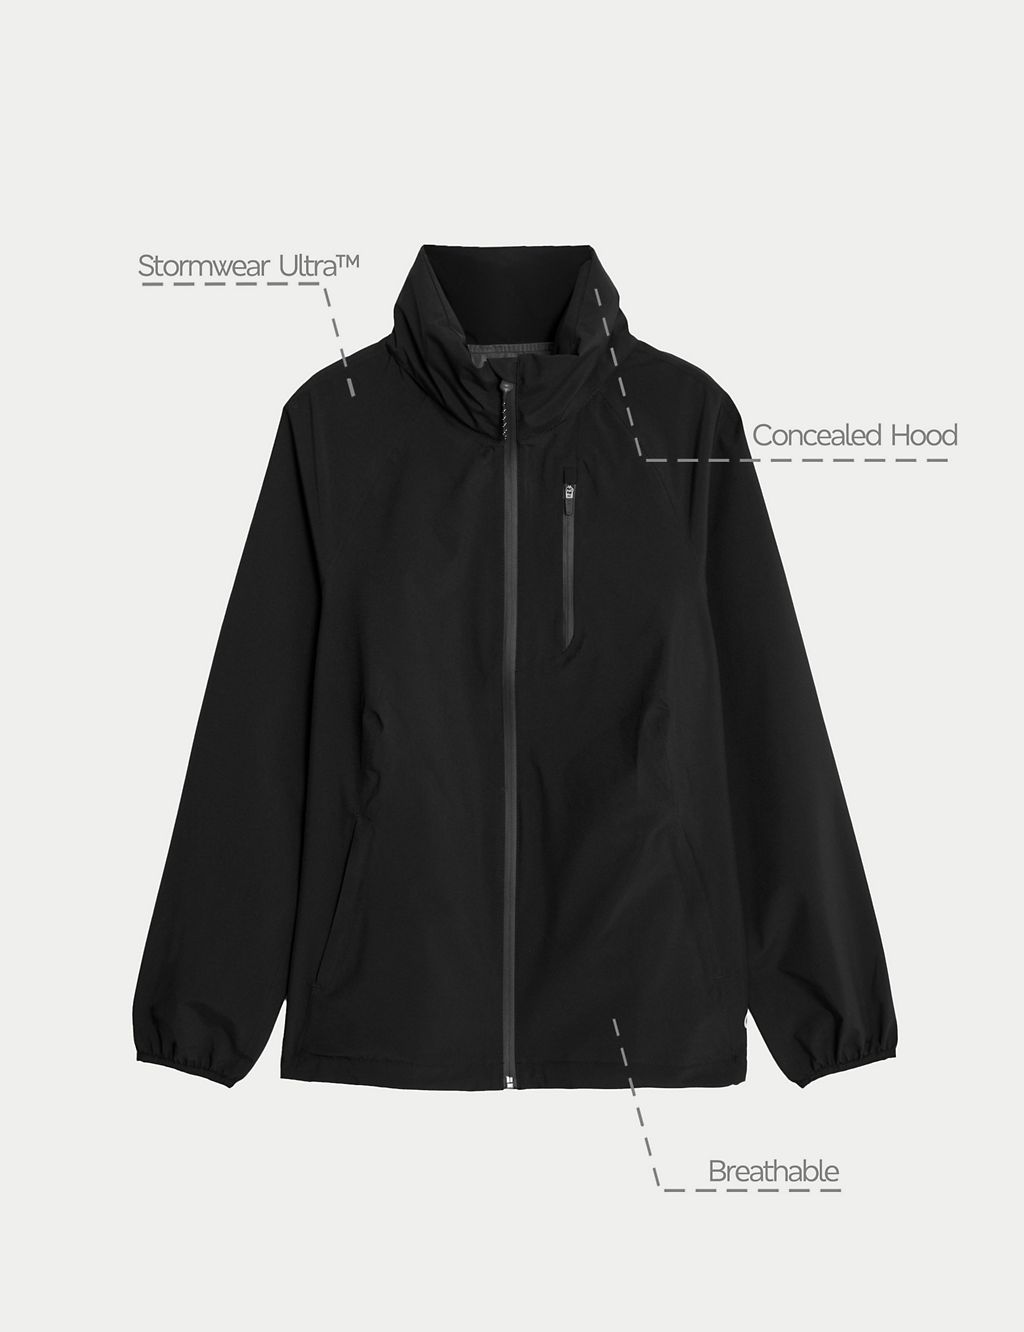 Waterproof Hooded Sports Jacket with Stormwear™ Ultra 9 of 9